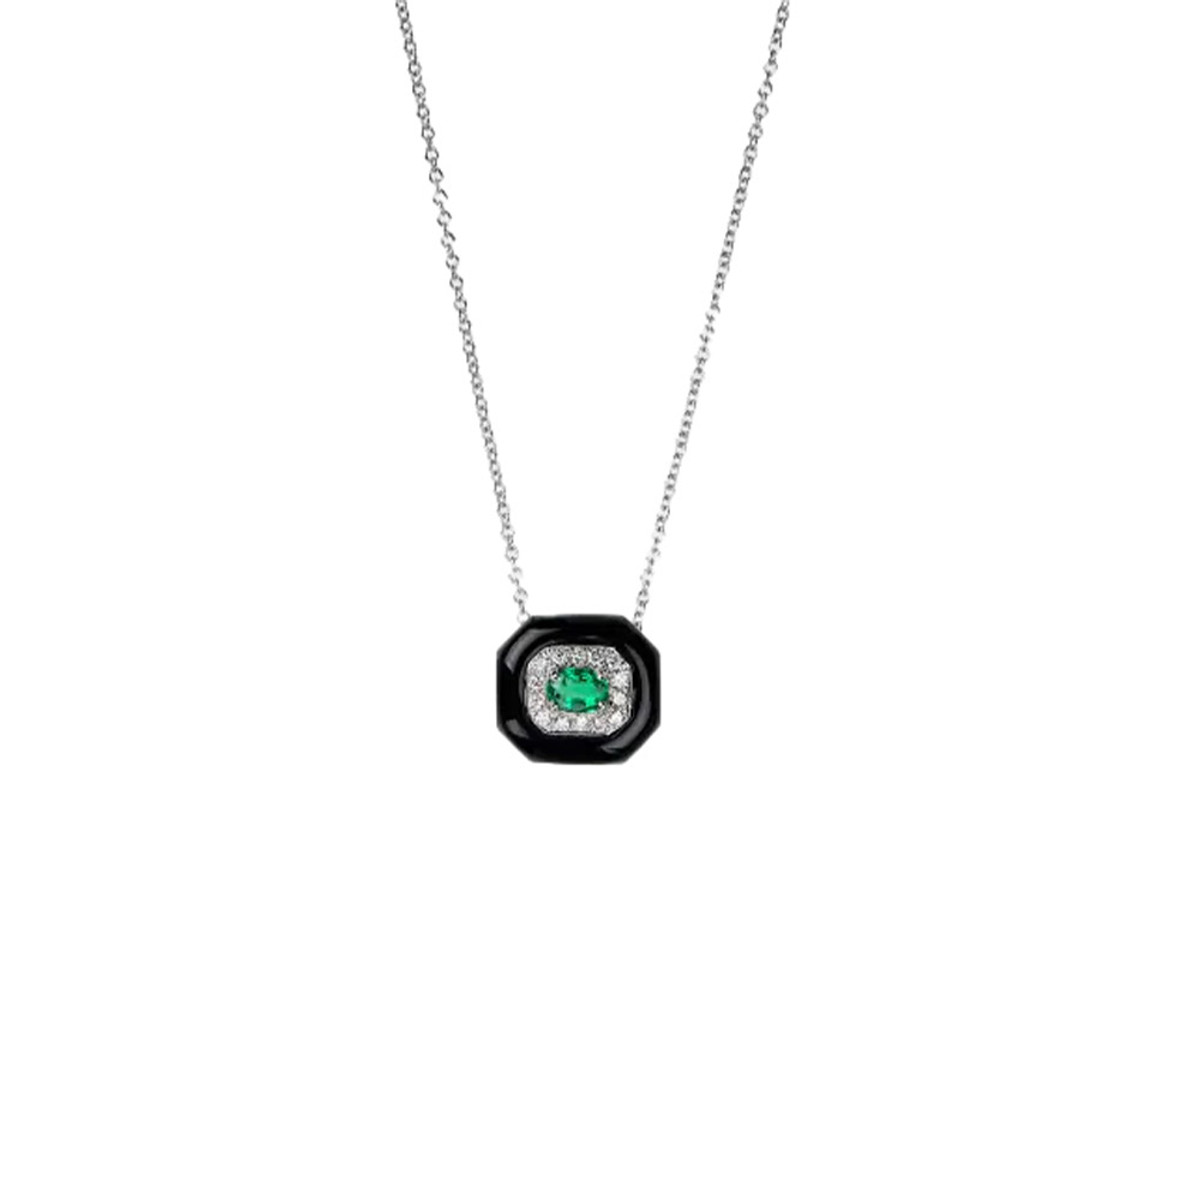 Nikos Koulis 18K White Gold Oui Diamond and Emerald Necklace-41565 Product Image